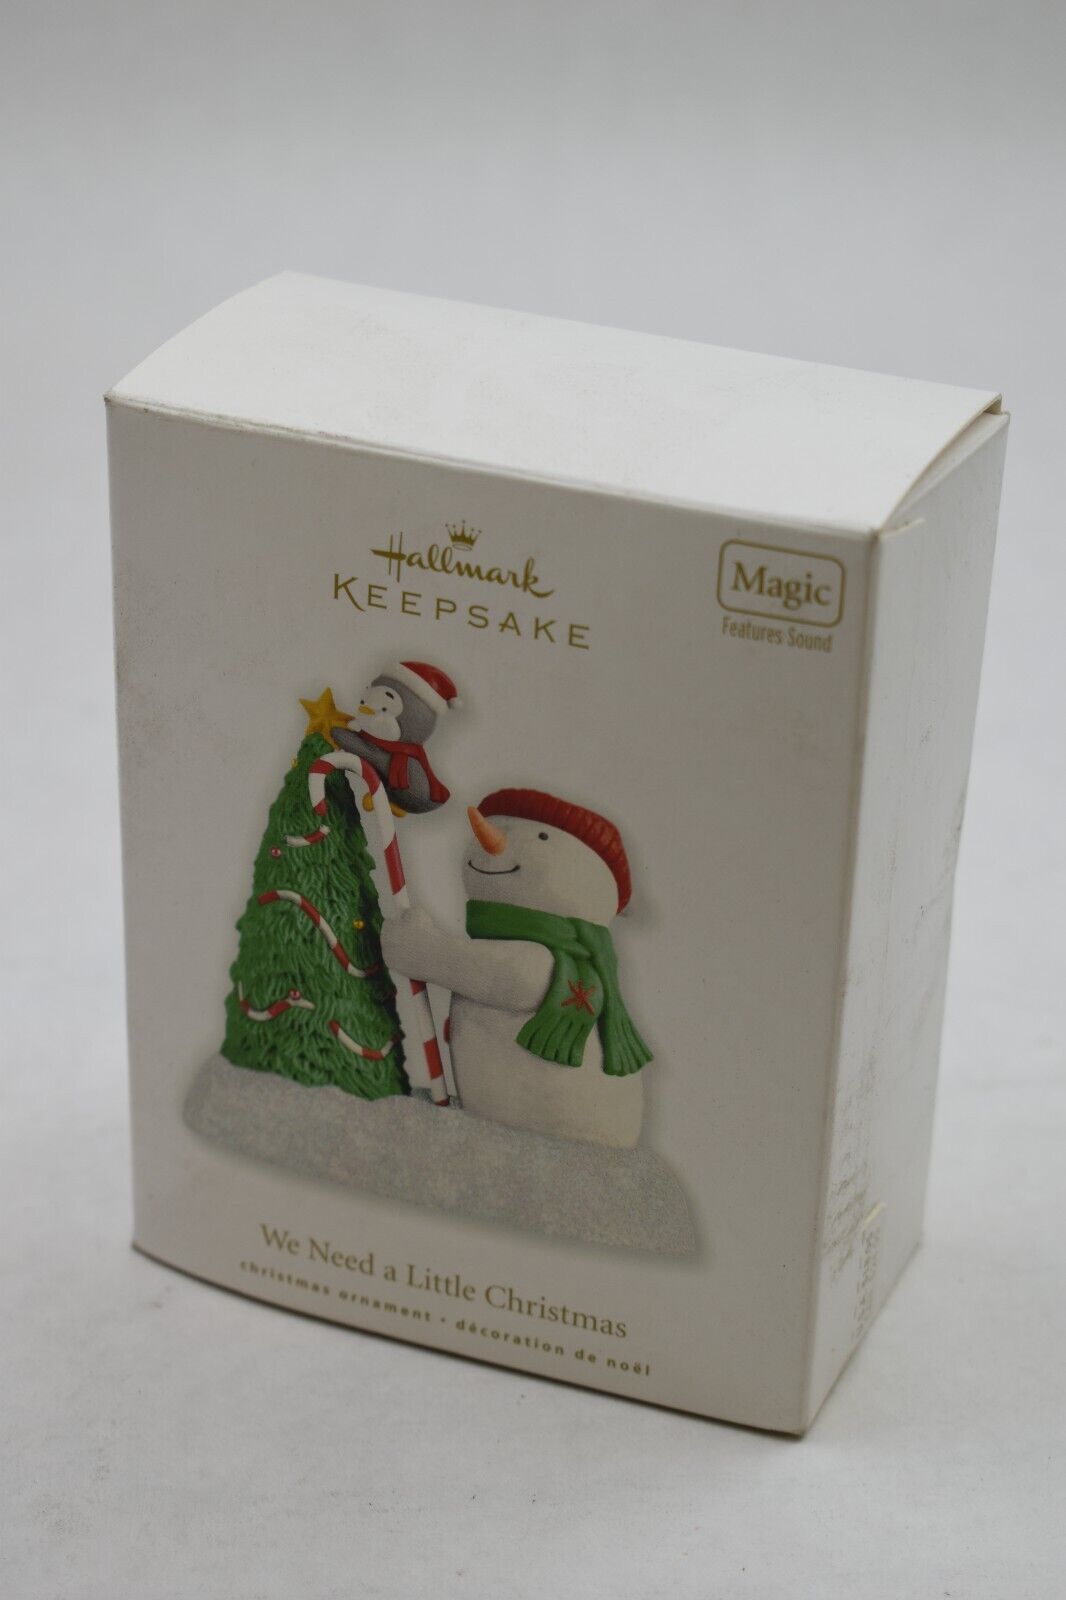 2010 Hallmark Keepsake We Need a Little Christmas Ornament Magic Sound READ DESC